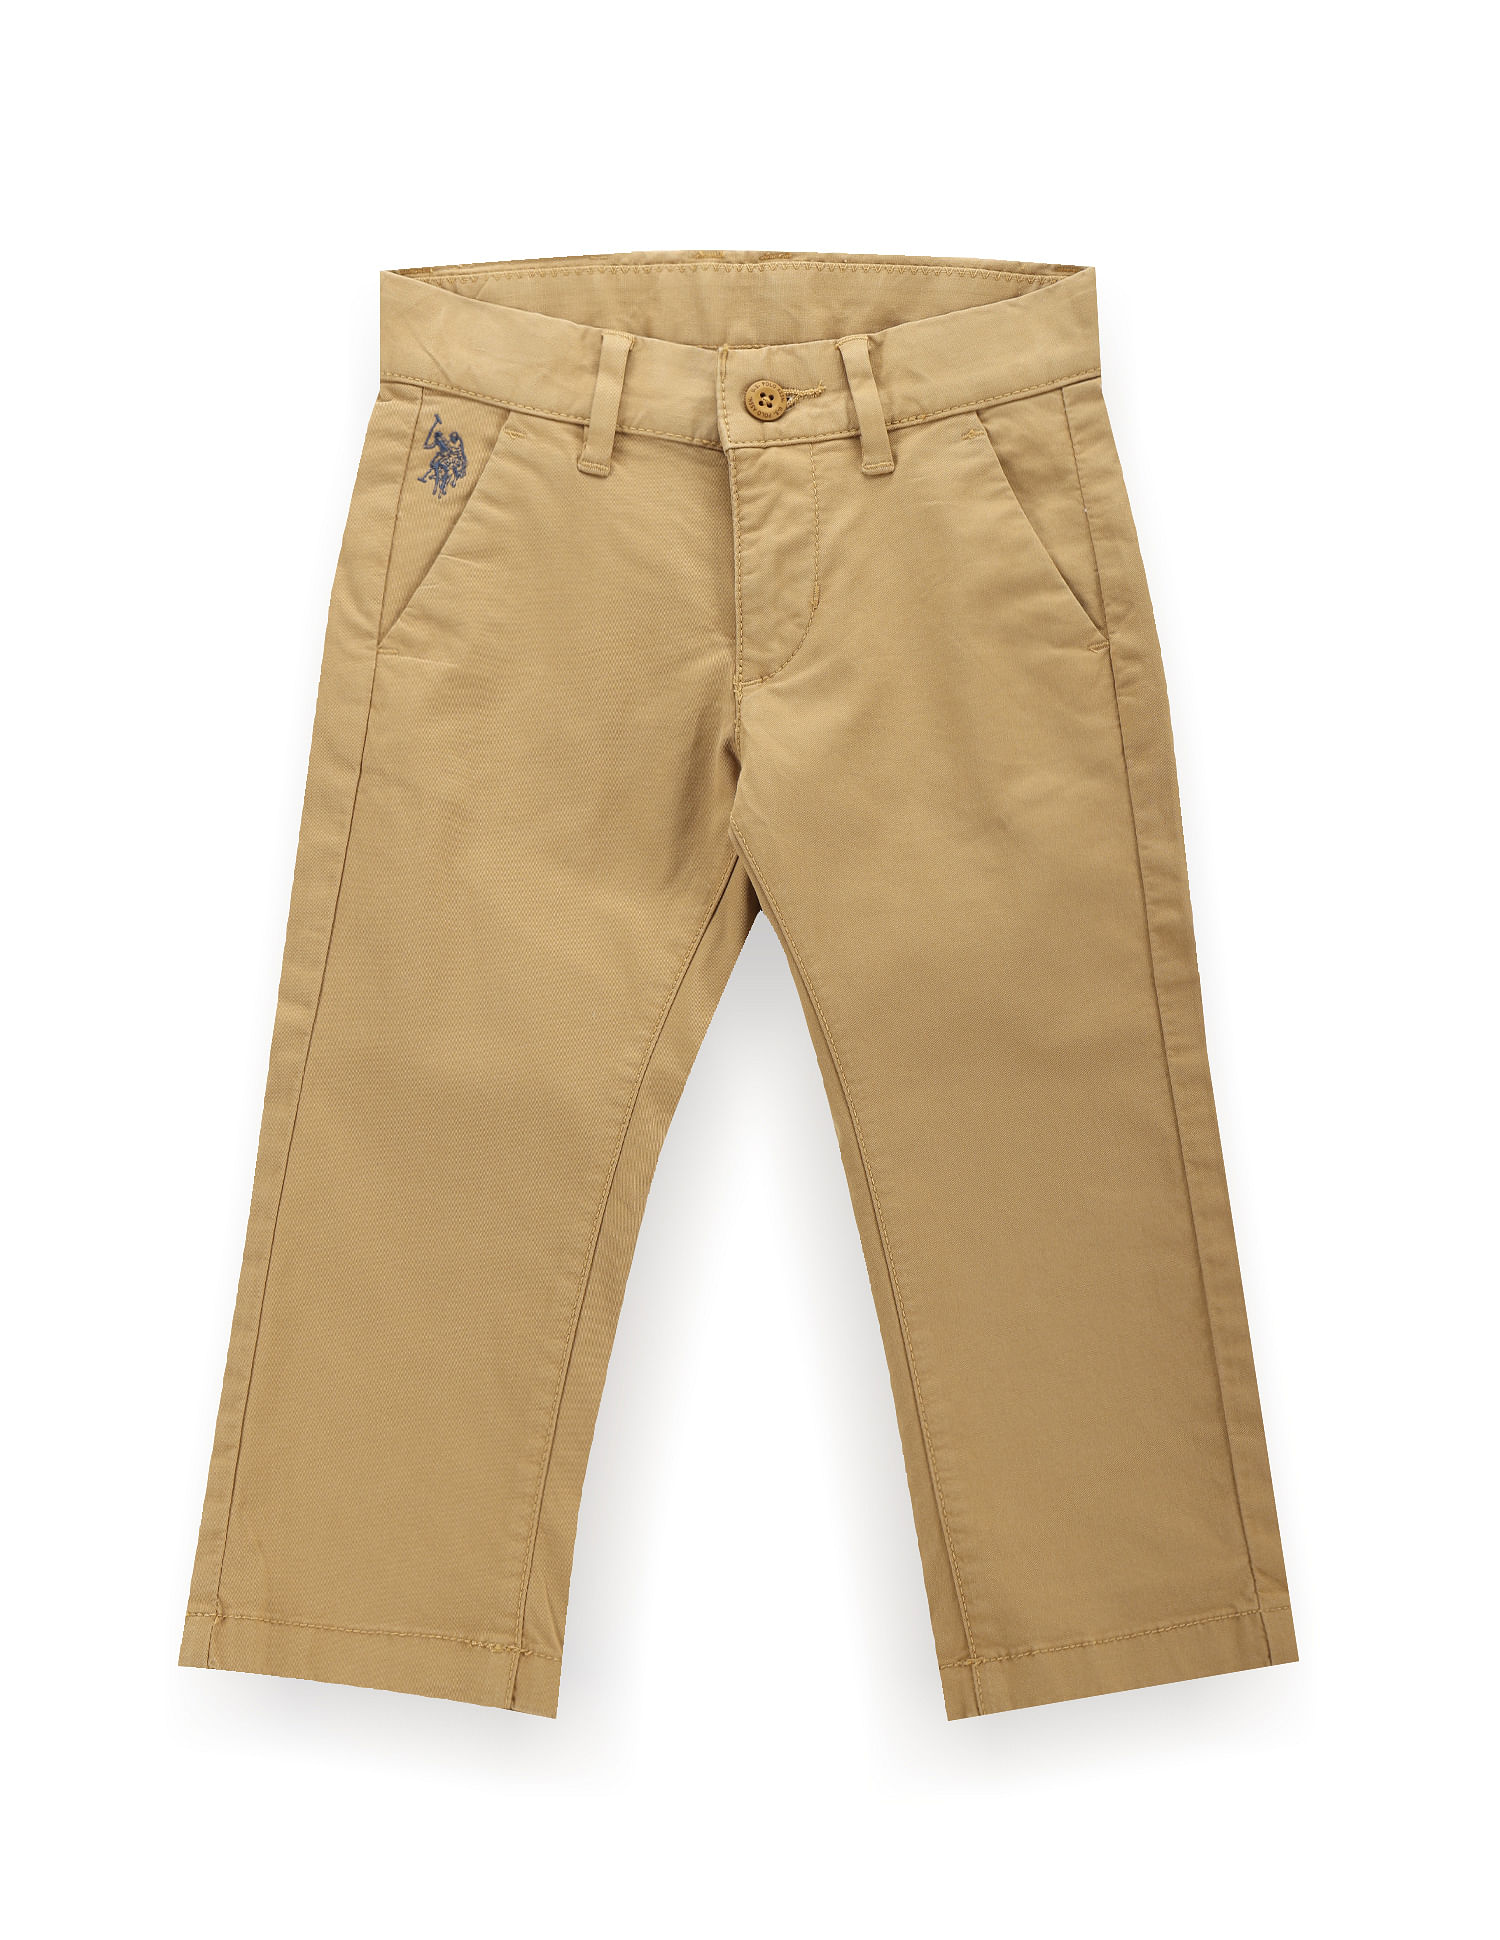 renvena Kids Girls Cargo Jogger Pants Sports Trousers Sweatpants Cotton  Drawstring Dungarees Bottoms with Pockets Beige 8 - Walmart.com